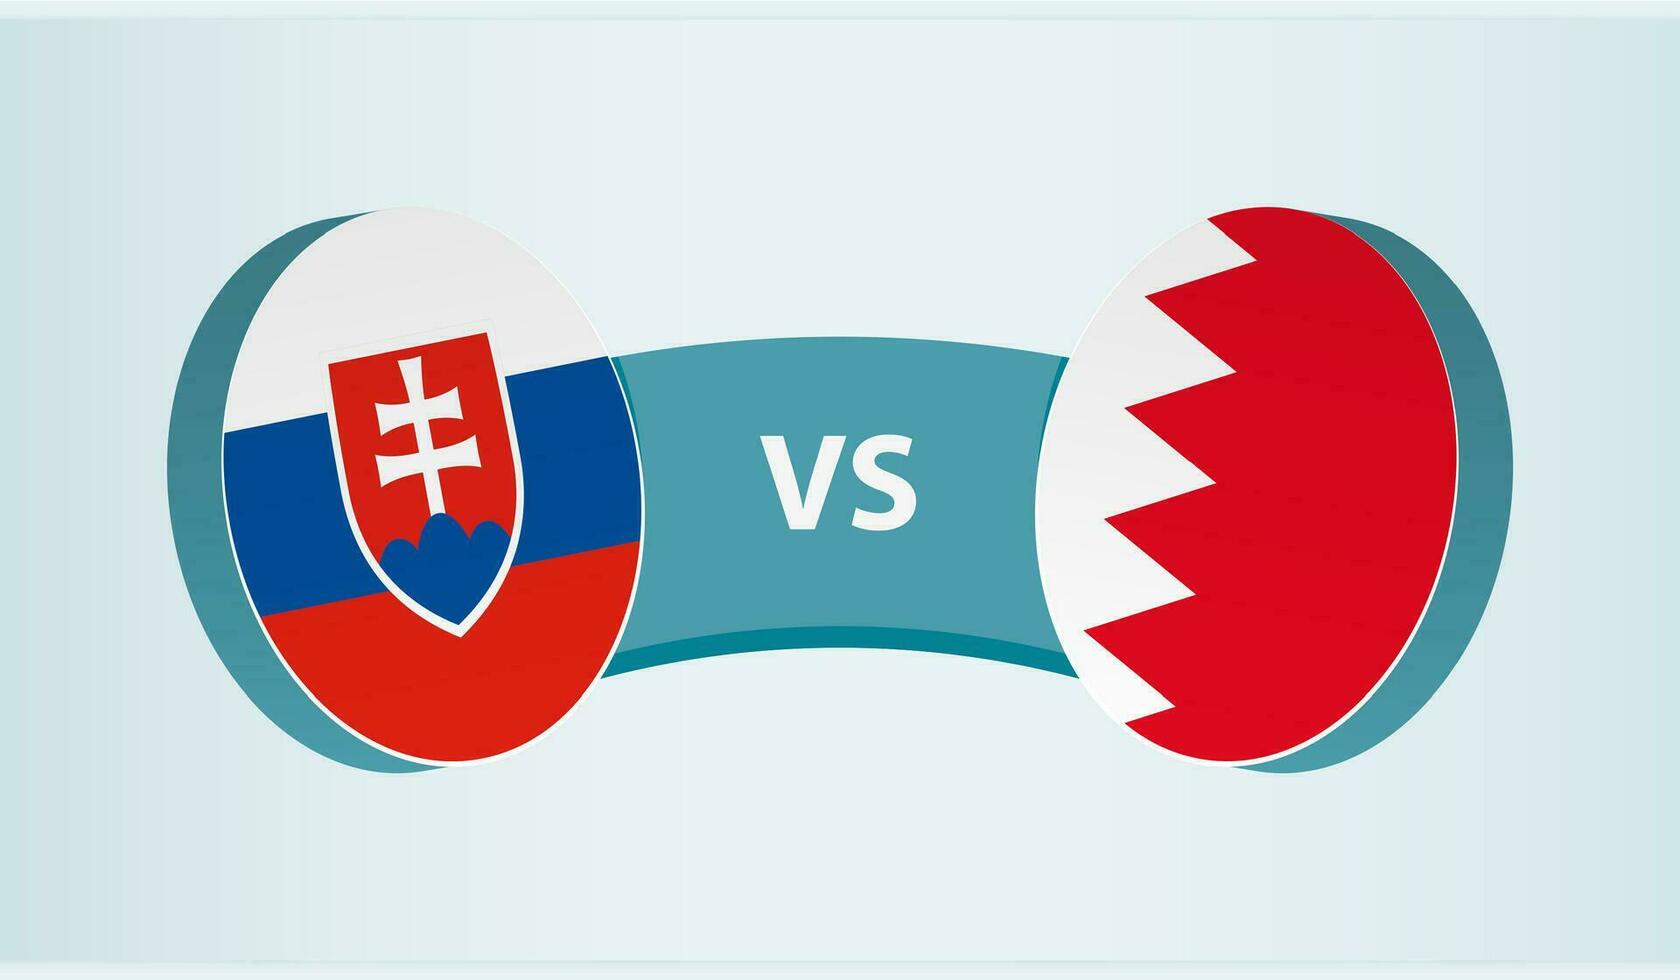 Slovakia versus Bahrain, team sports competition concept. vector